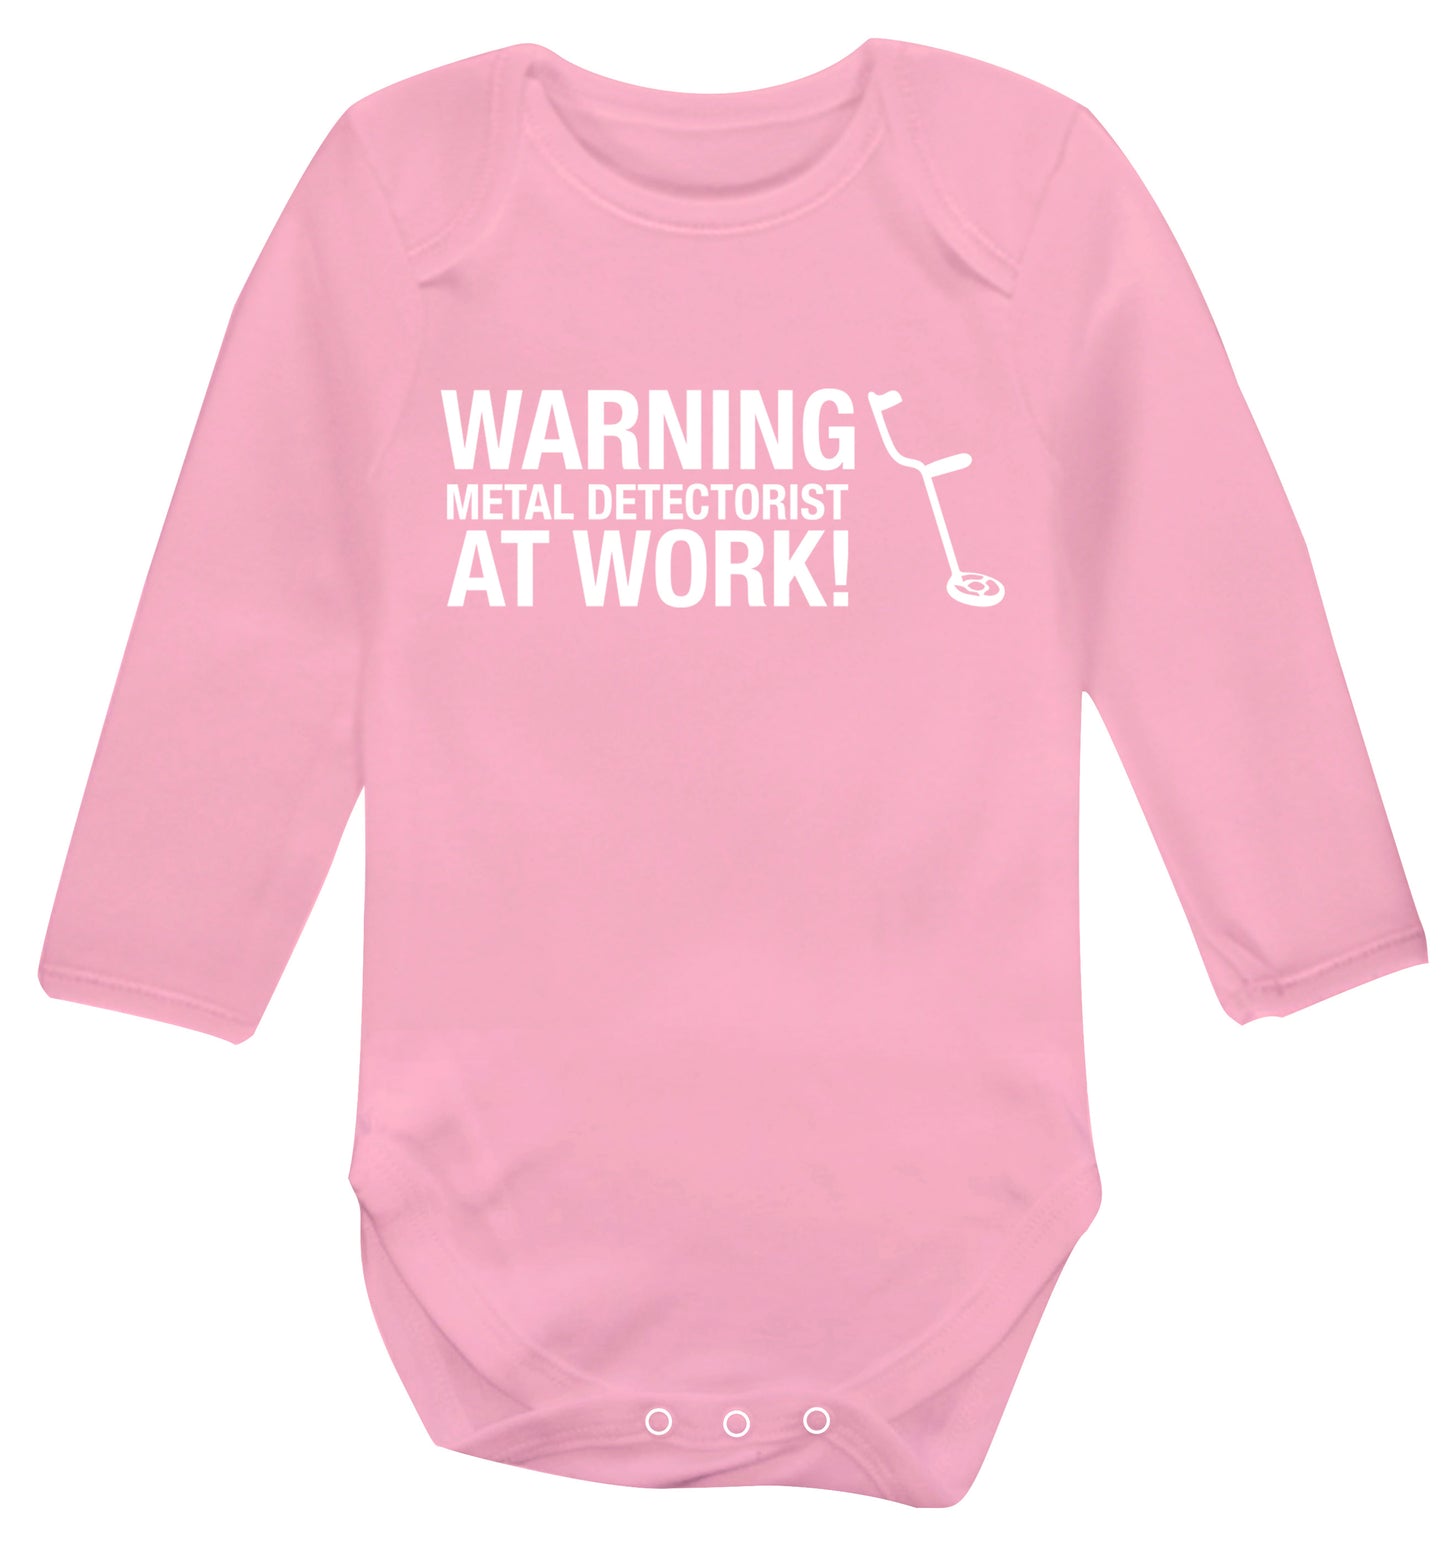 Warning metal detectorist at work! Baby Vest long sleeved pale pink 6-12 months